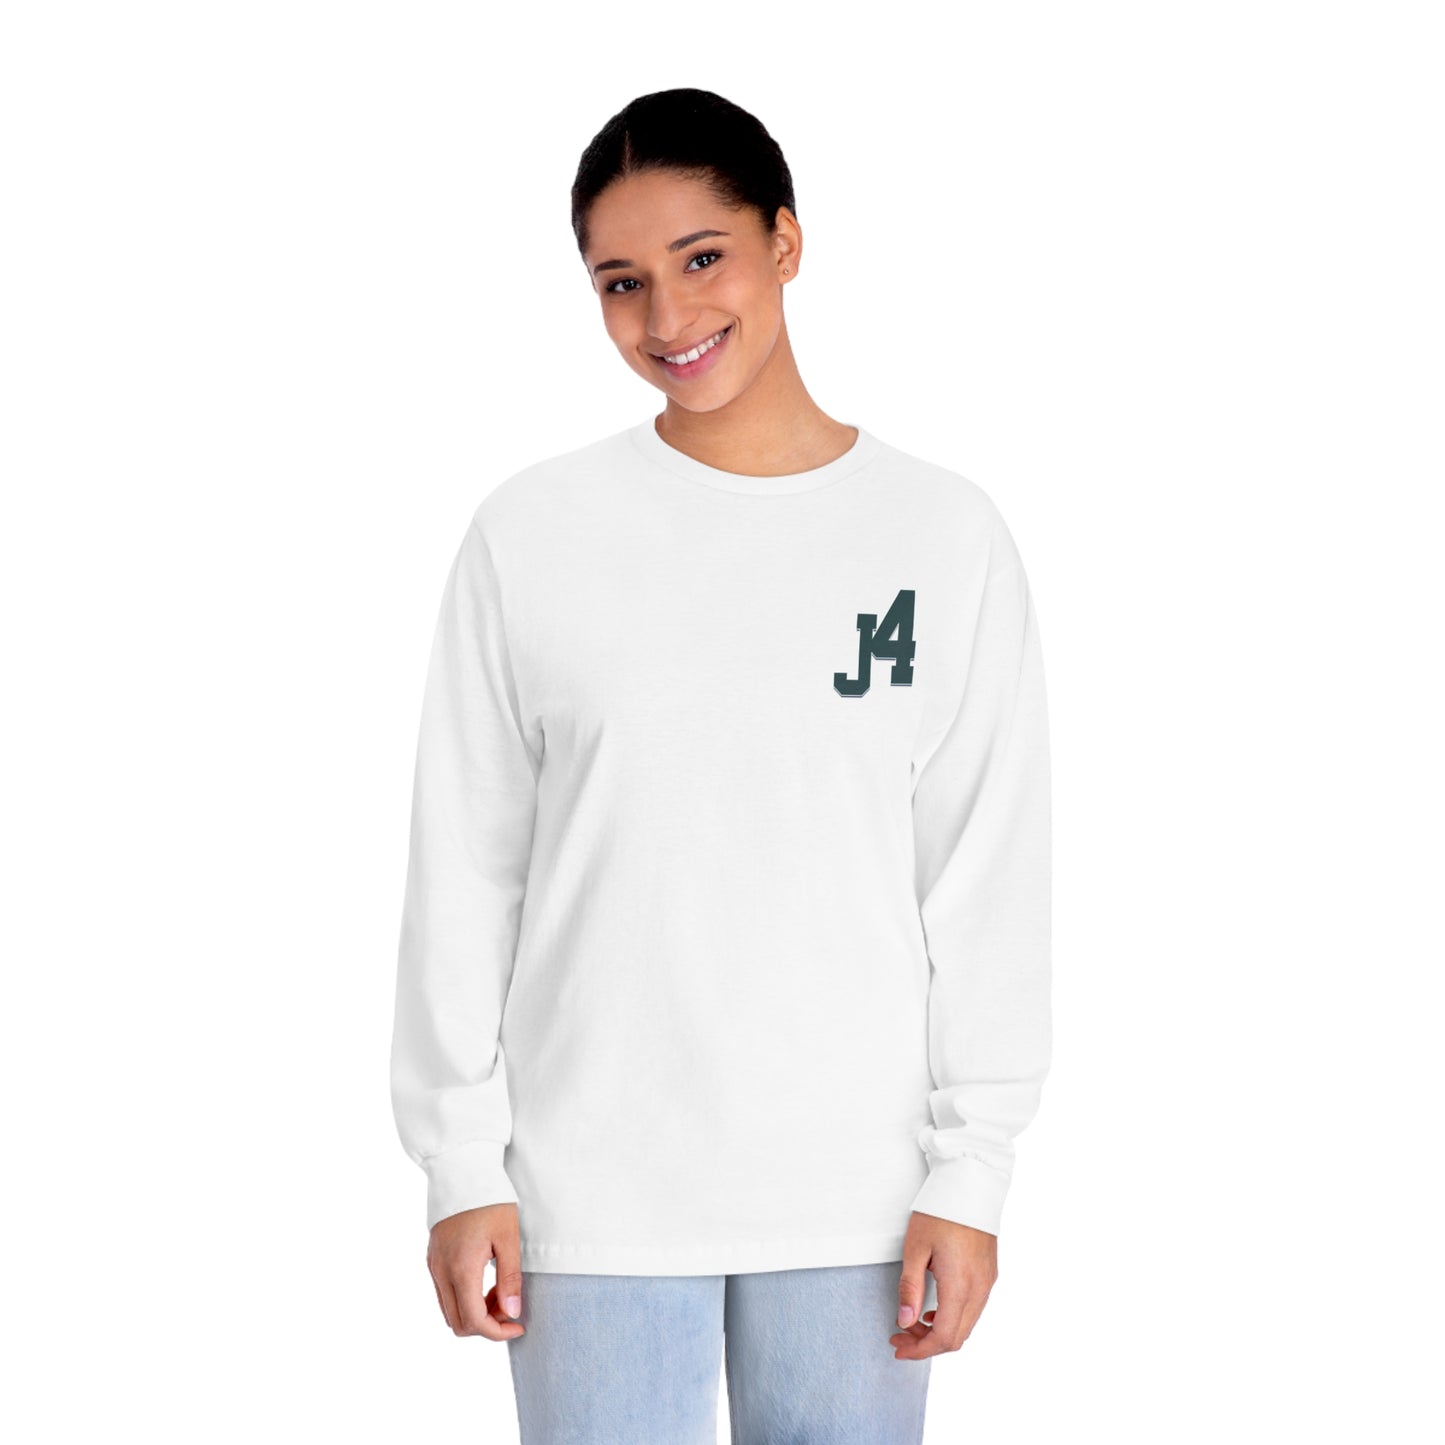 J4 Classic Long Sleeve T-Shirt